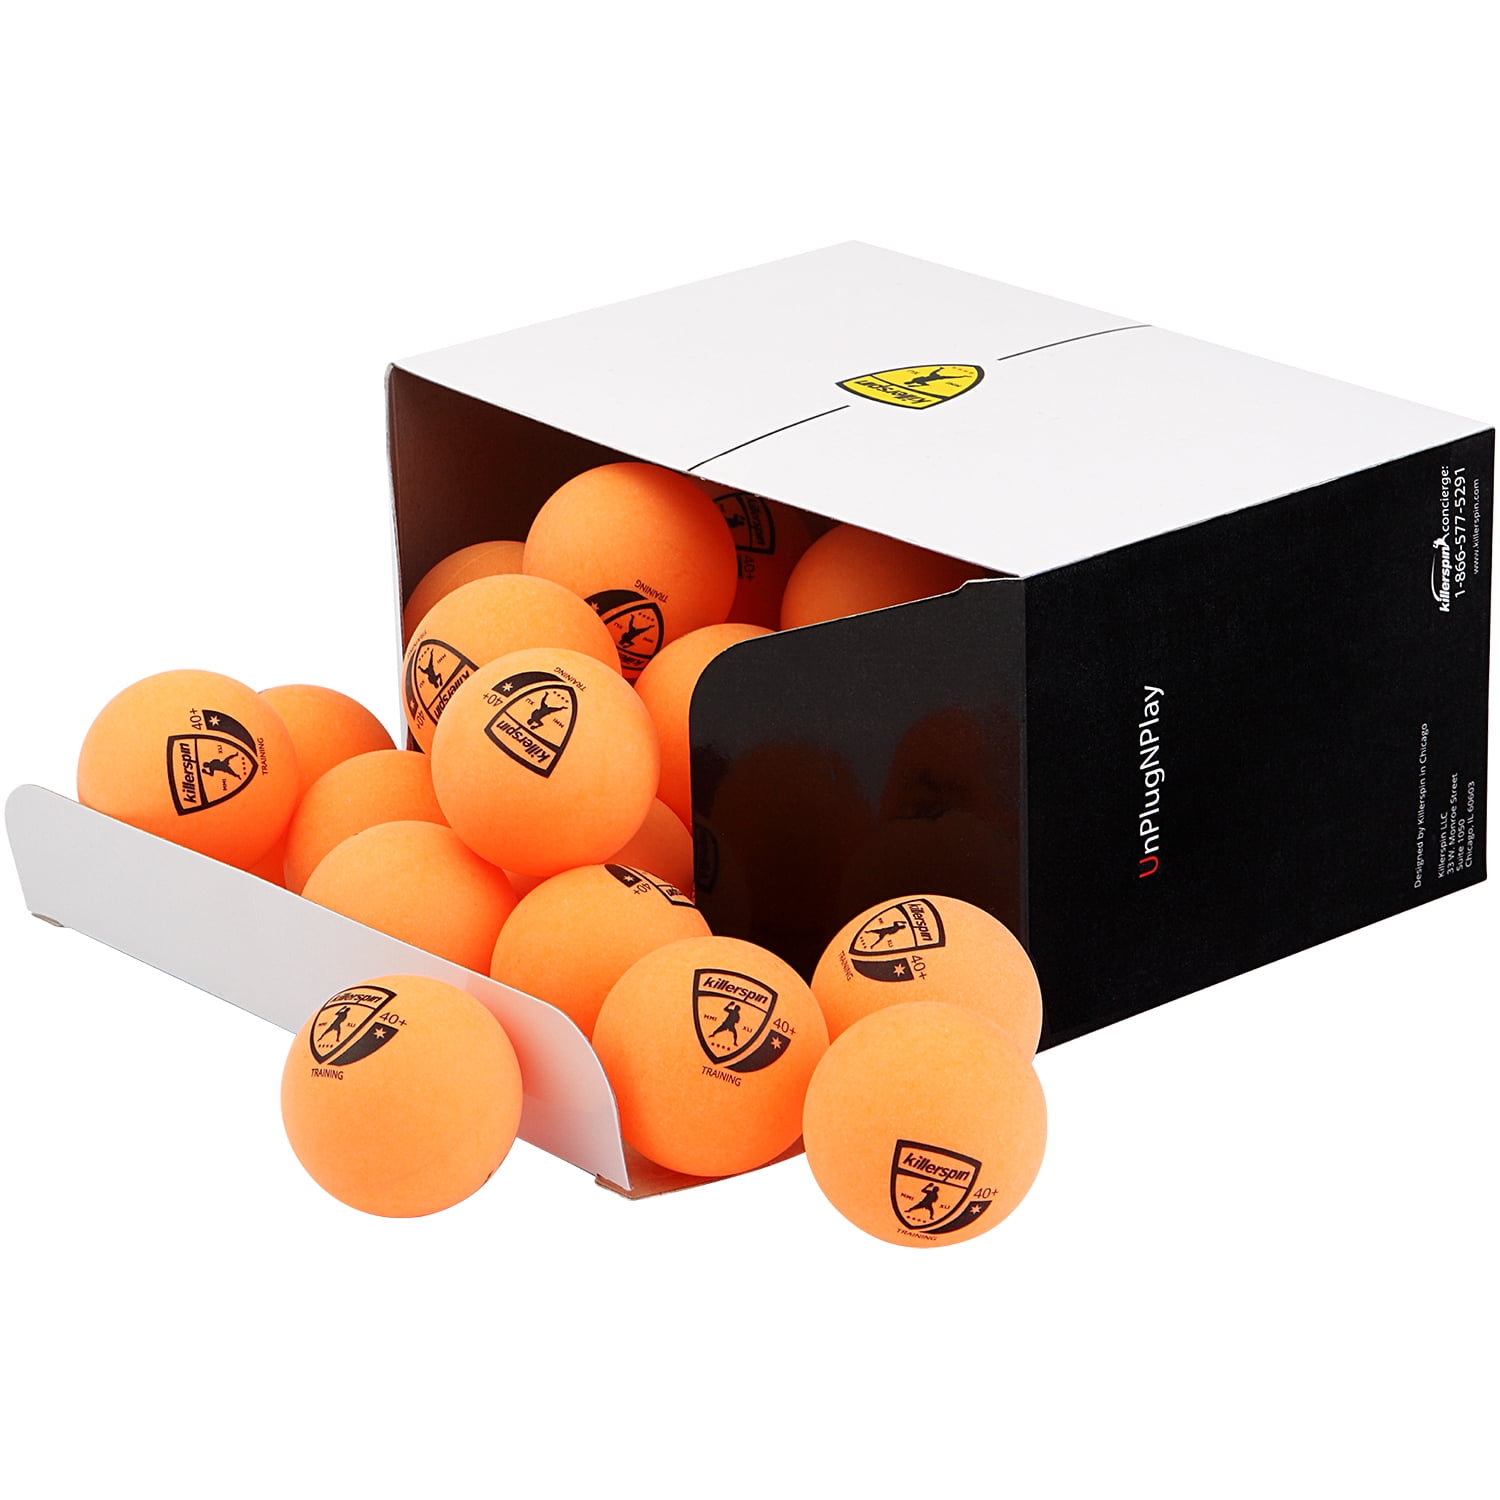 MAPOL 50 Pack Orange 3-Star Premium Ping Pong Balls Advanced Training Table Ten 